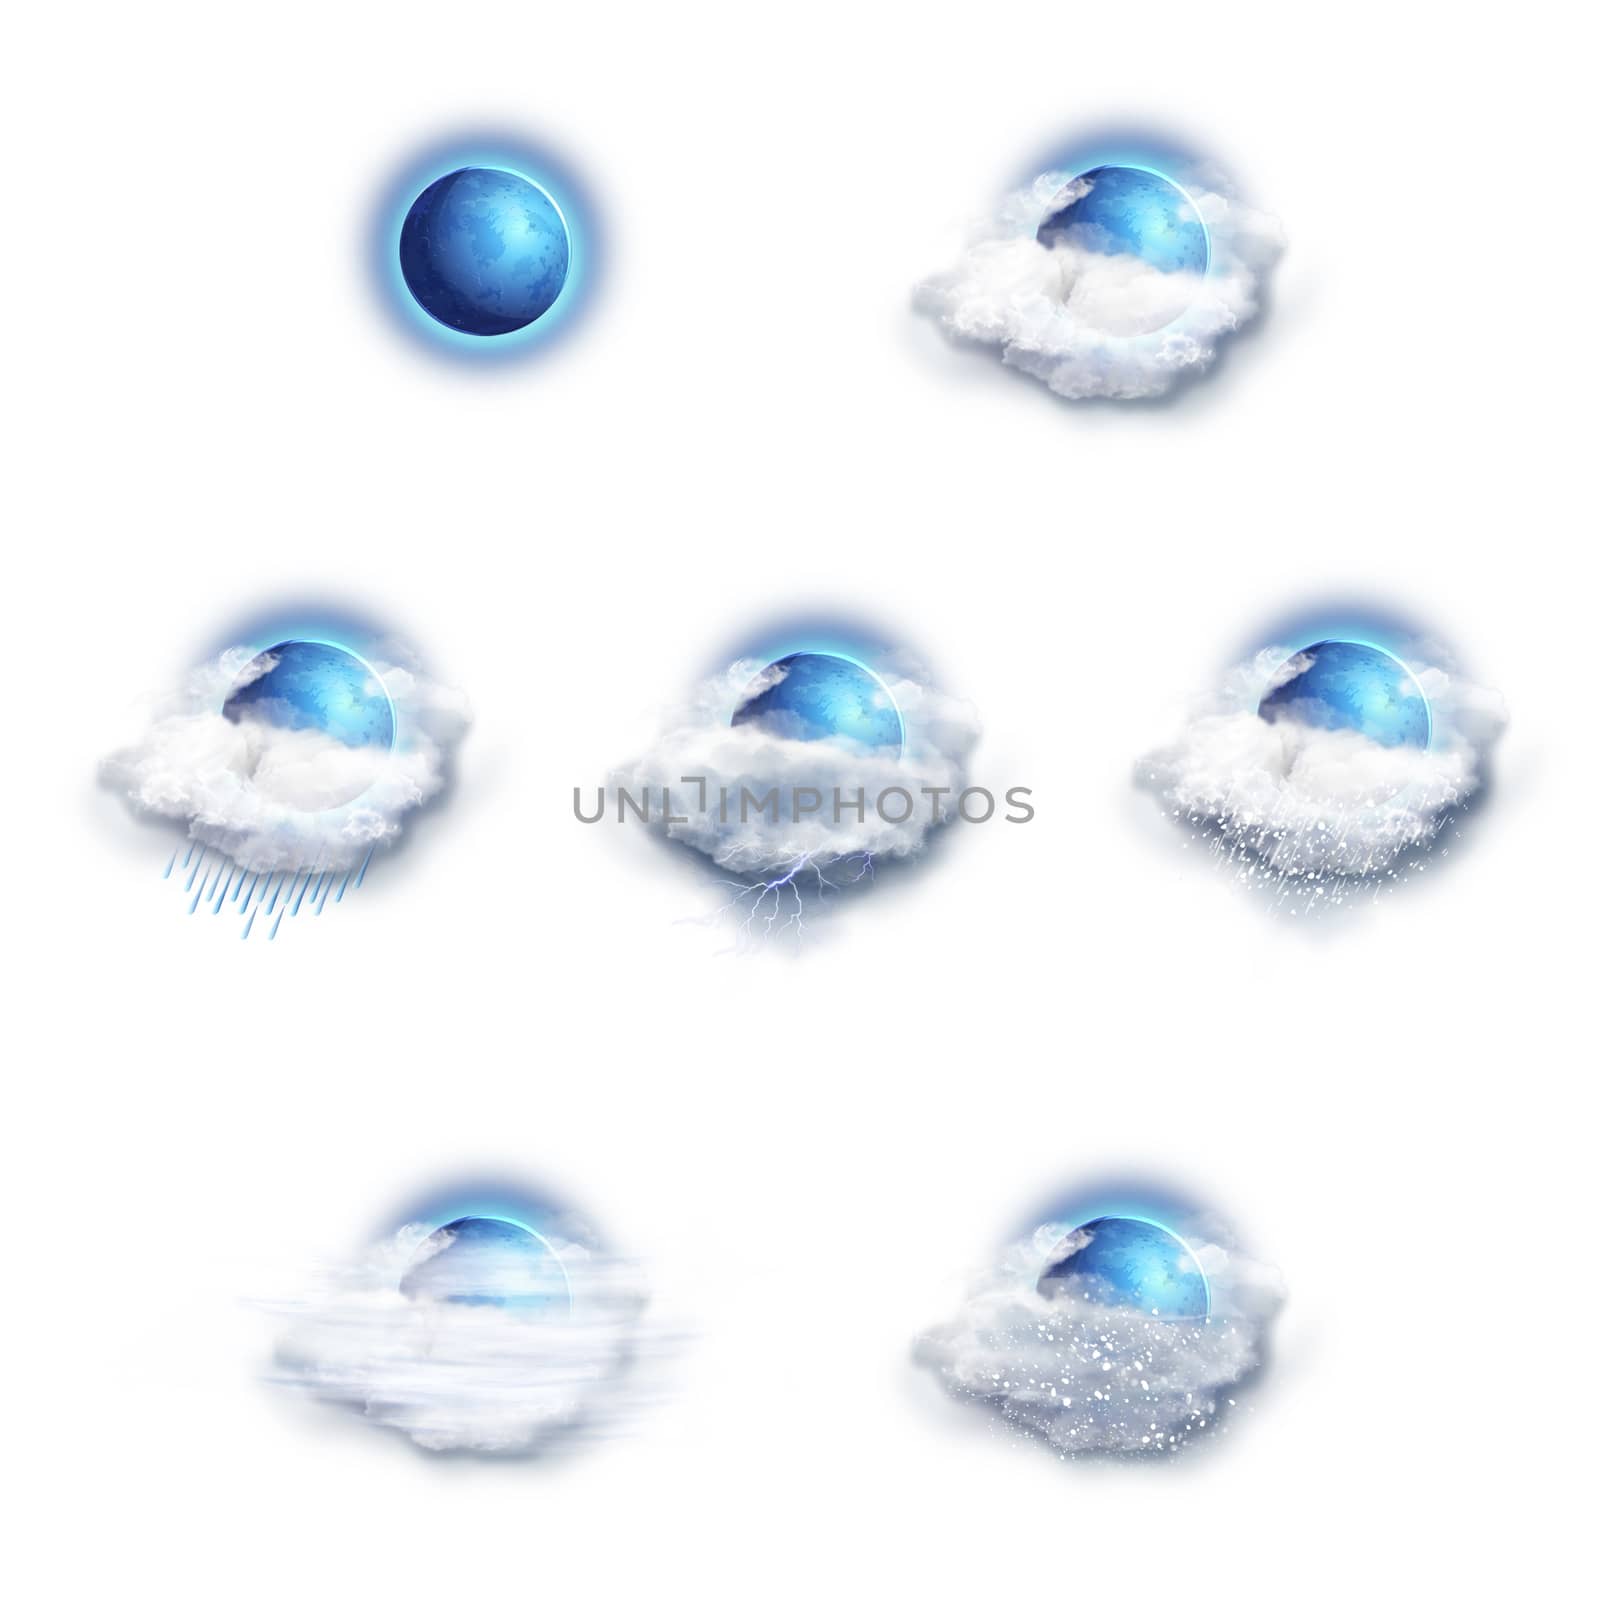 Weather Forecast Icons Set, on a white background